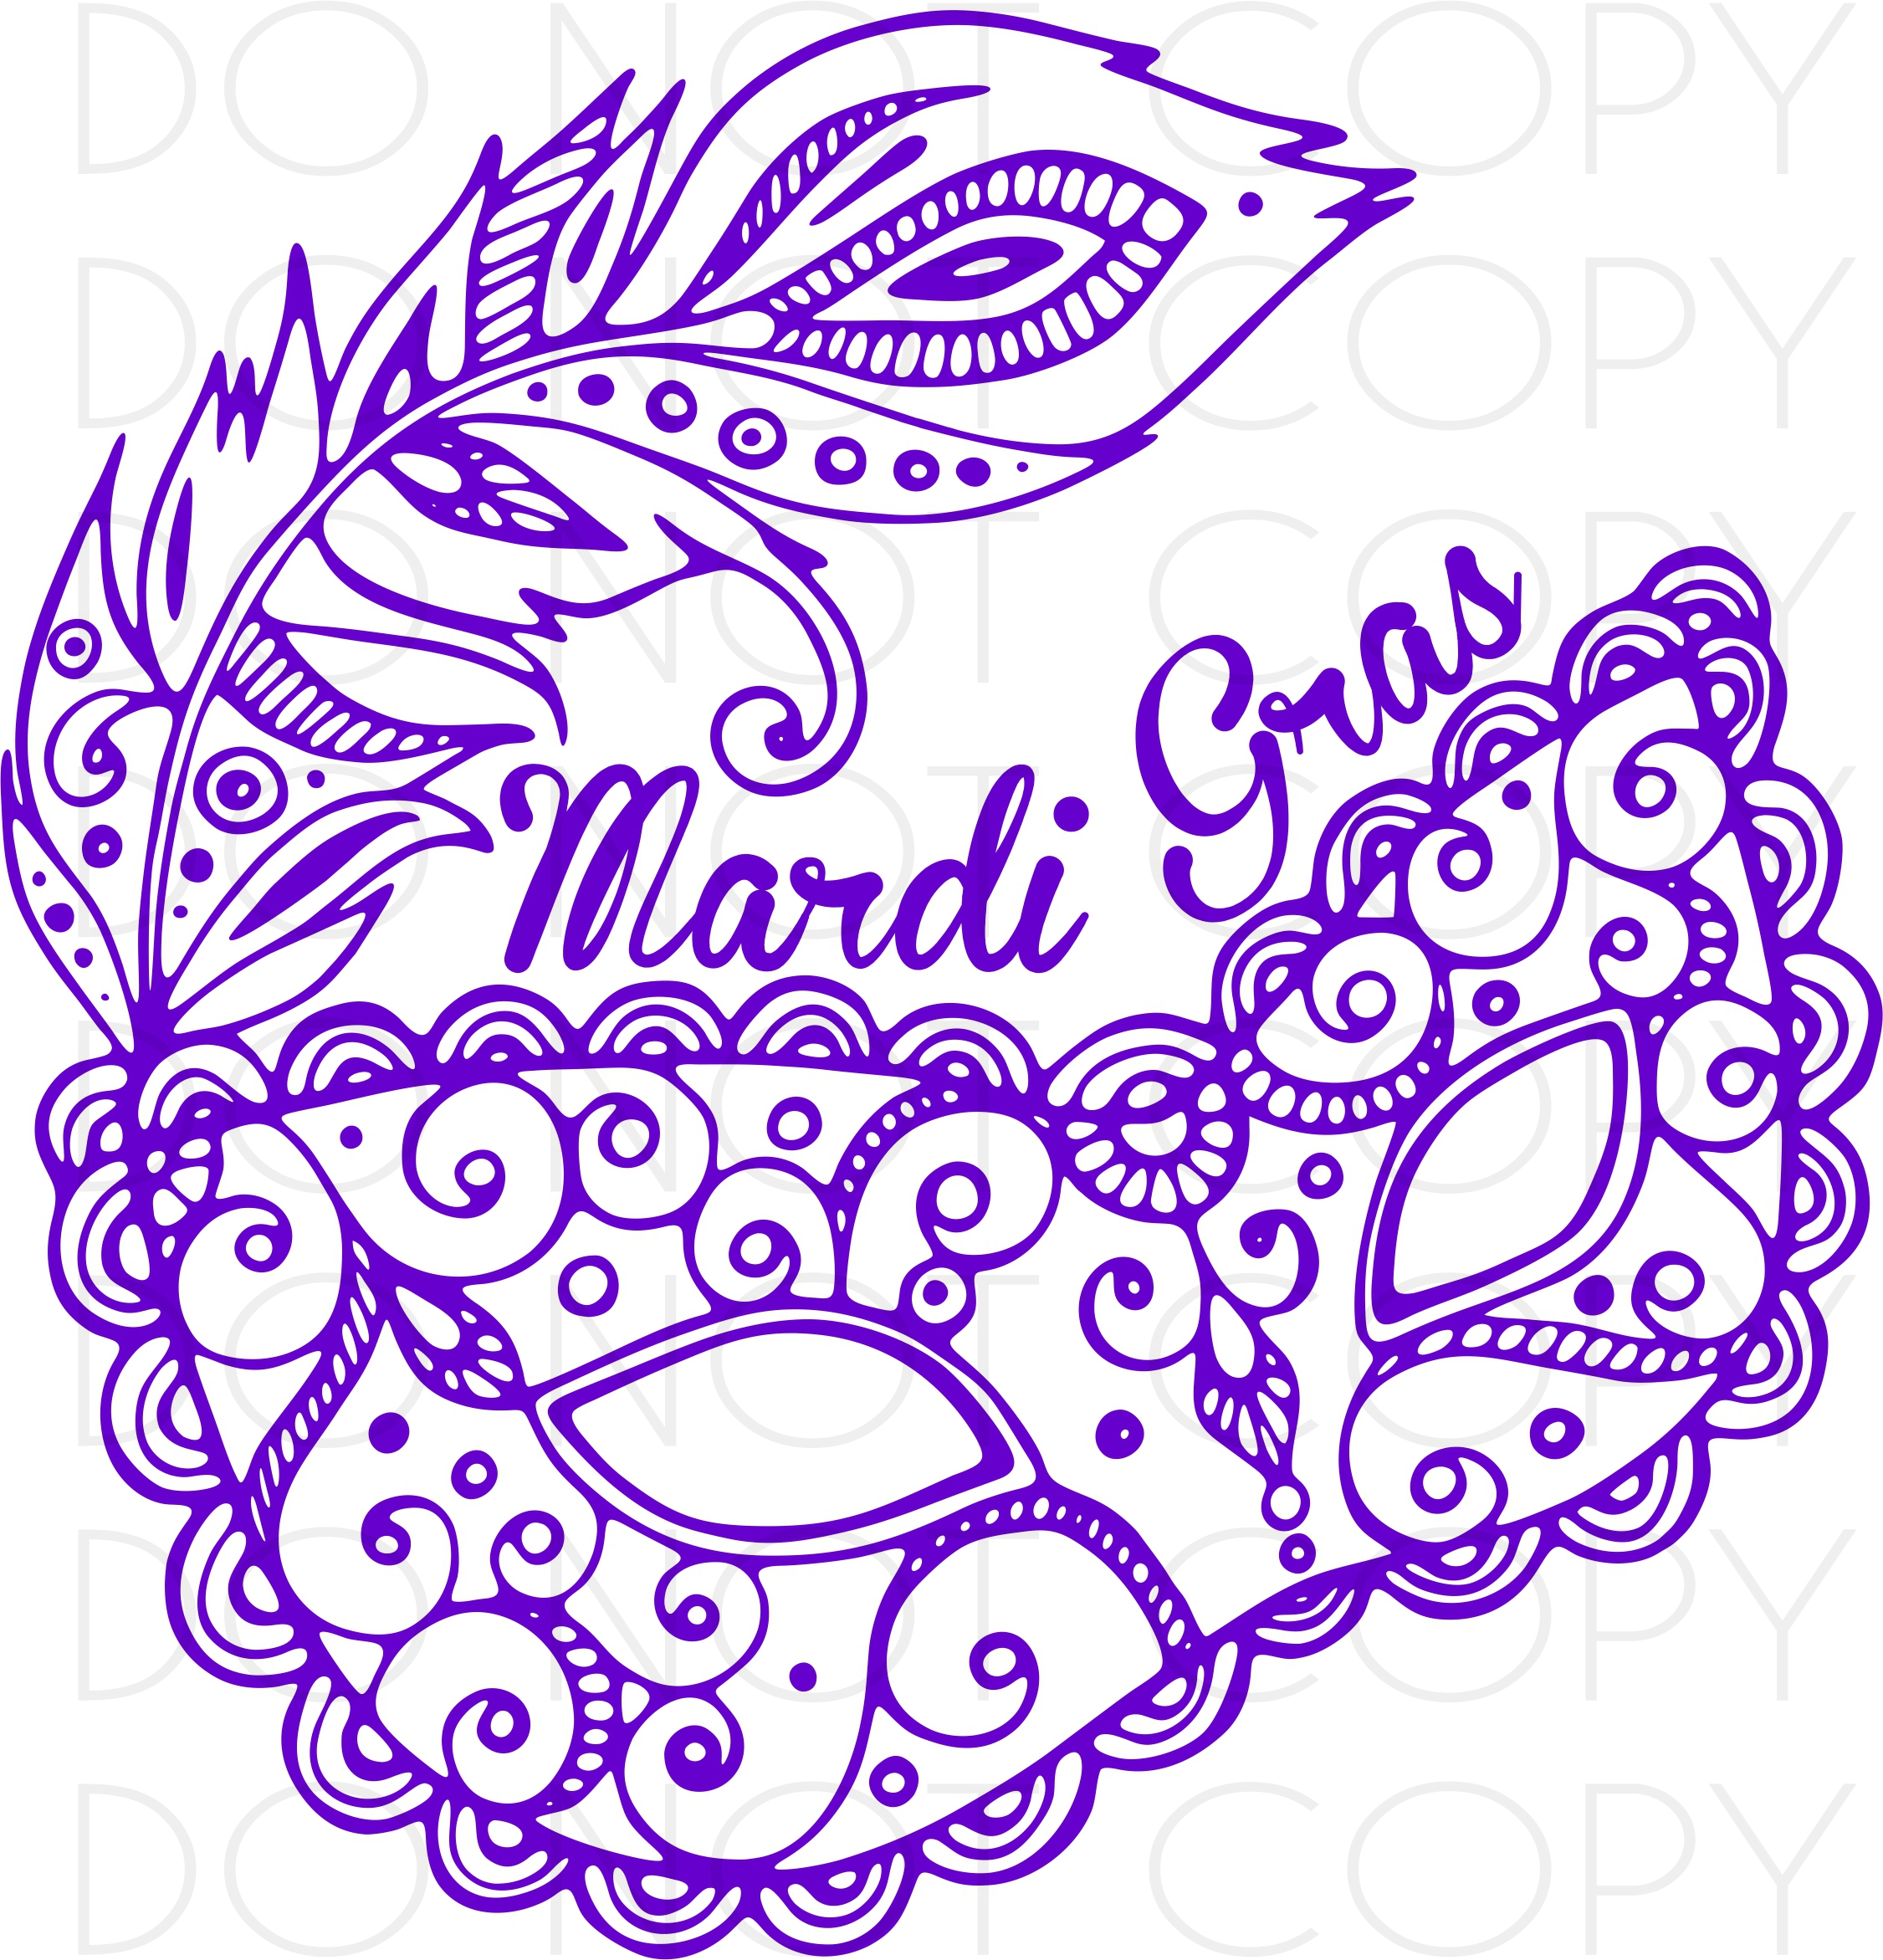 Mardi Gras Feathers SVG Cut file by Creative Fabrica Crafts